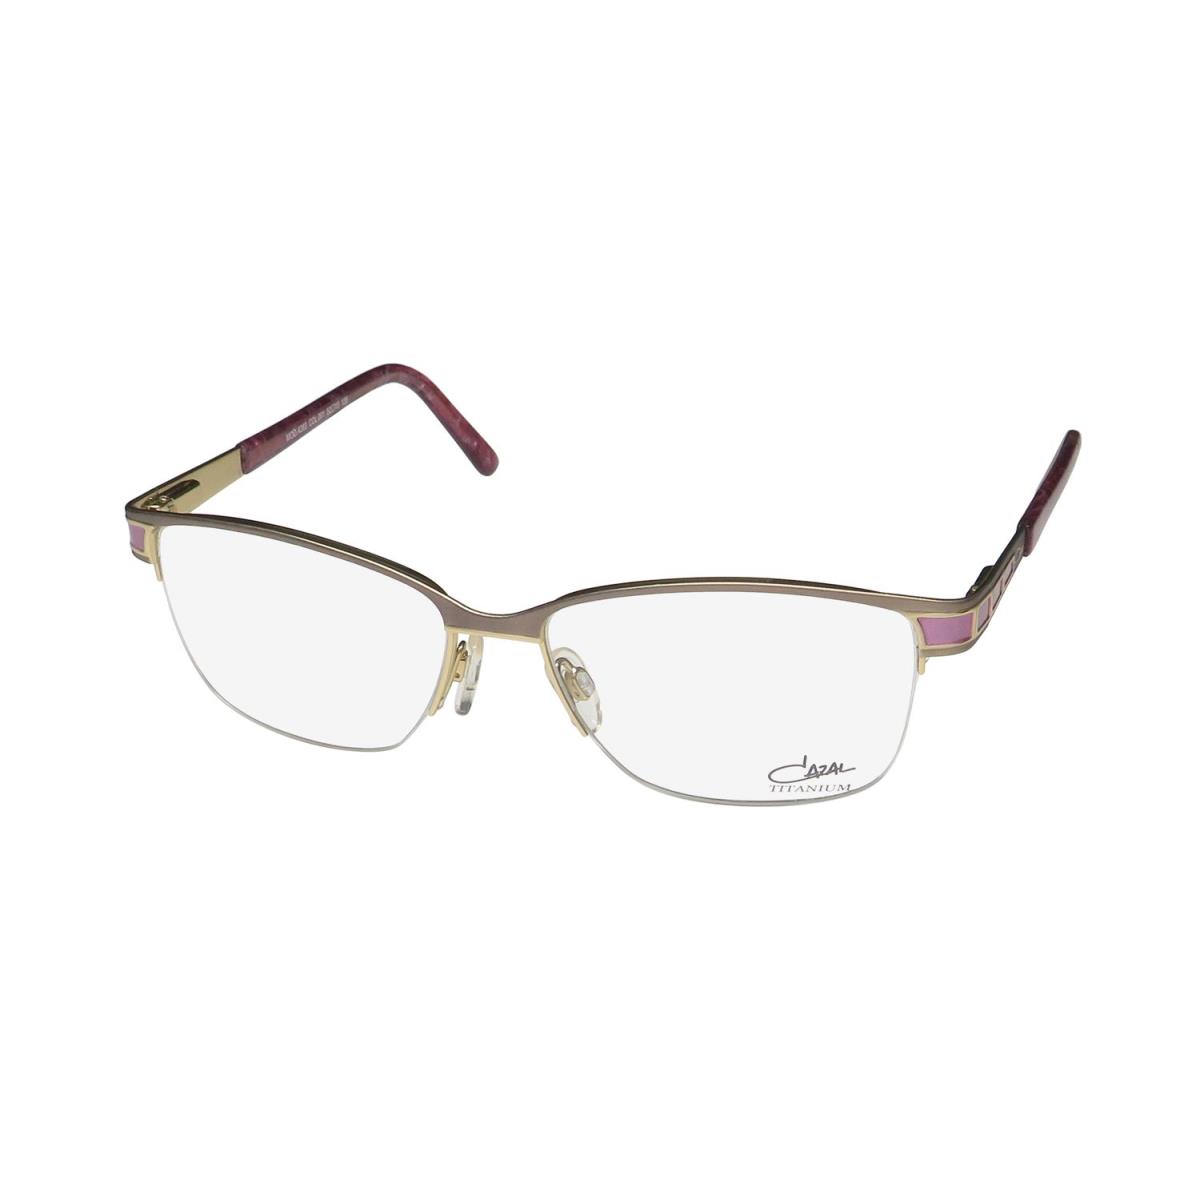 Cazal 4283 Cateye Titanium Semi-rimless Mde IN Germany Eyeglass Frame/glasses Grey / Rose / Gold